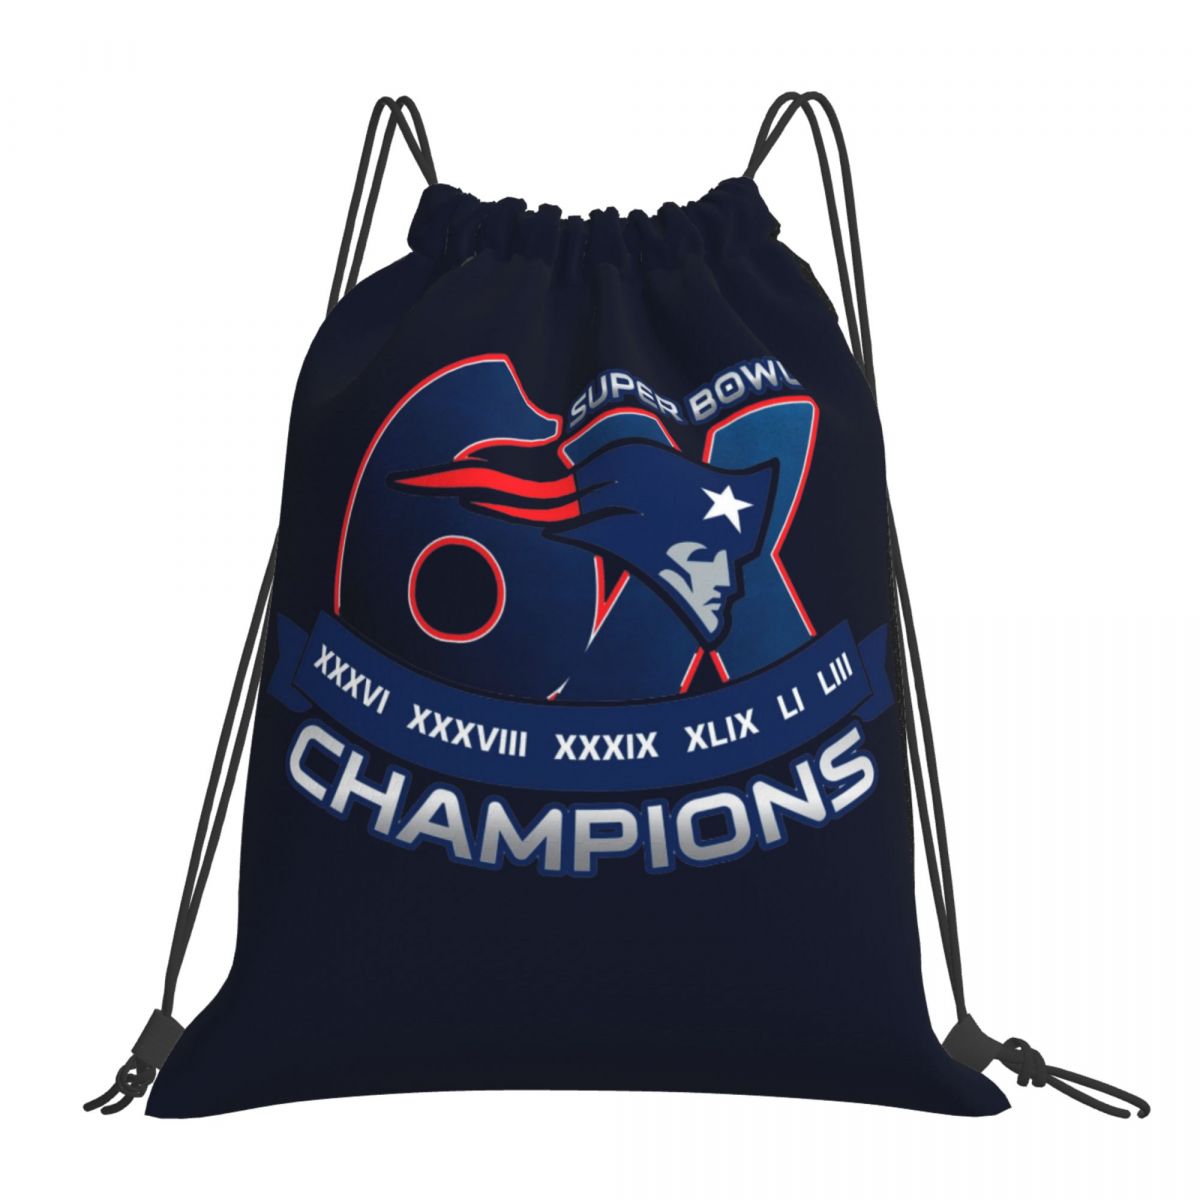 New England Patriots 6x Super Bowl Champions Drawstring Bags for School Gym